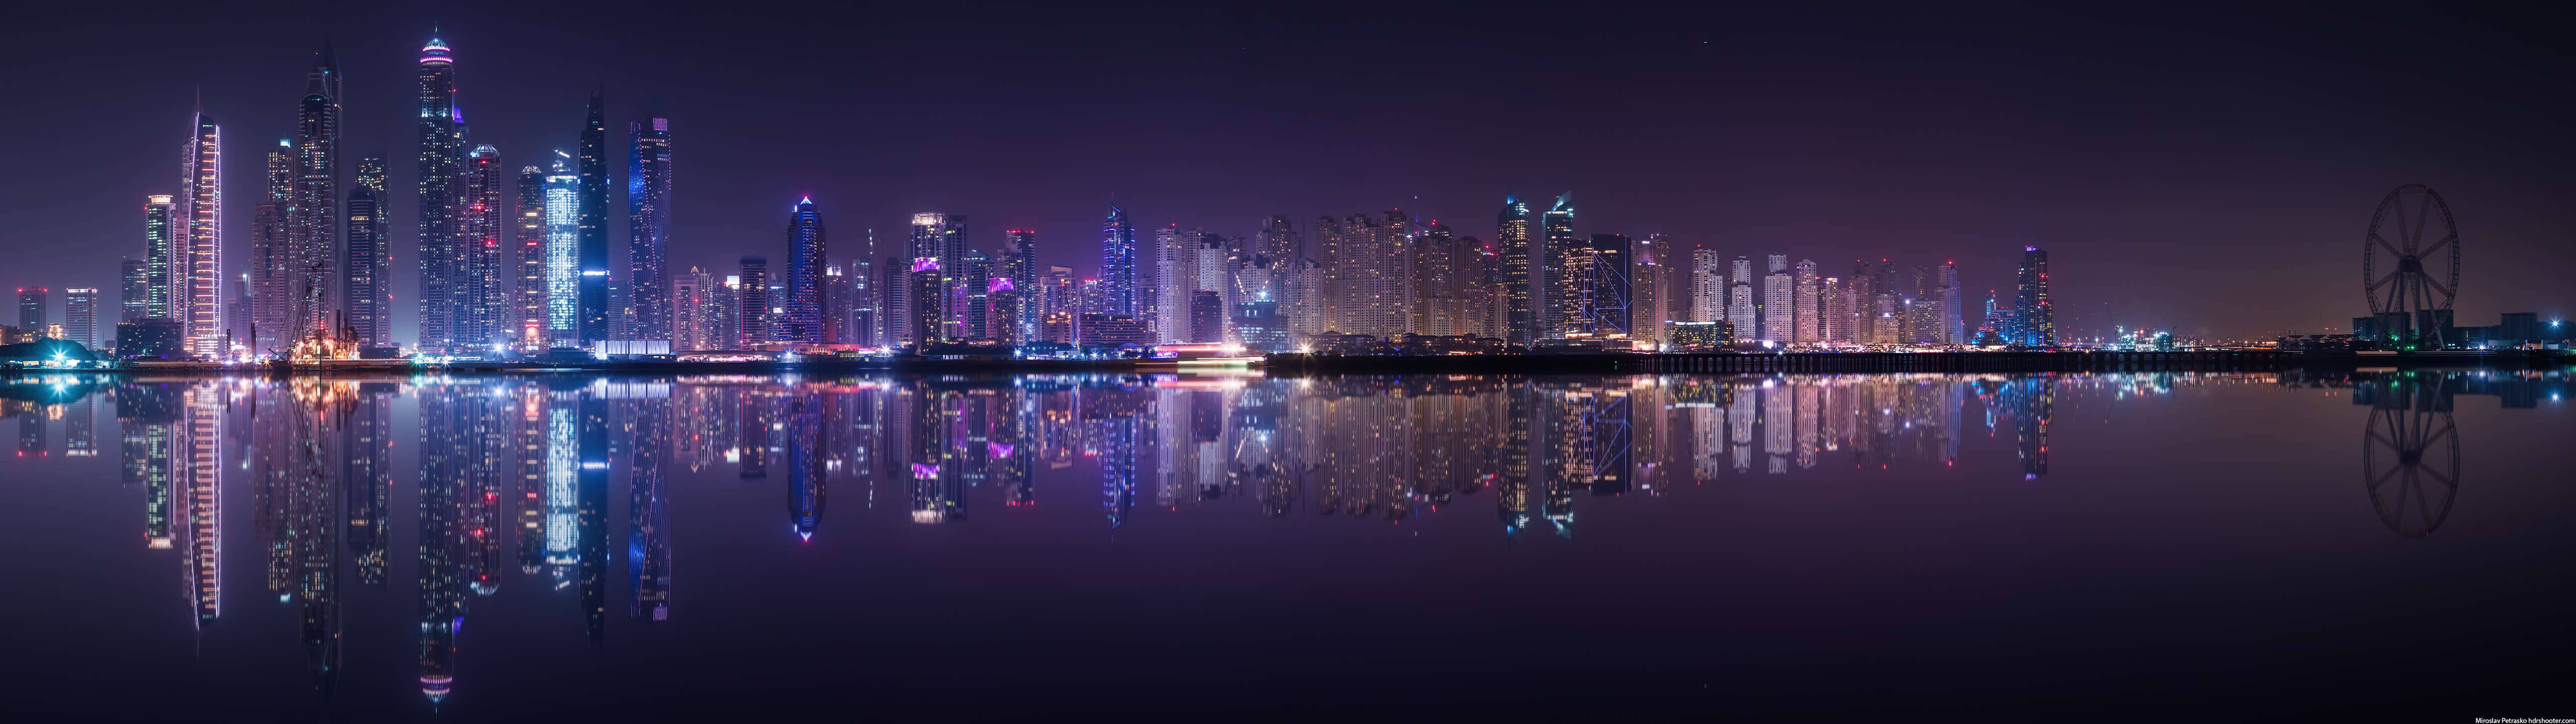 Ultra Wide 4k Aesthetic City Lights Background